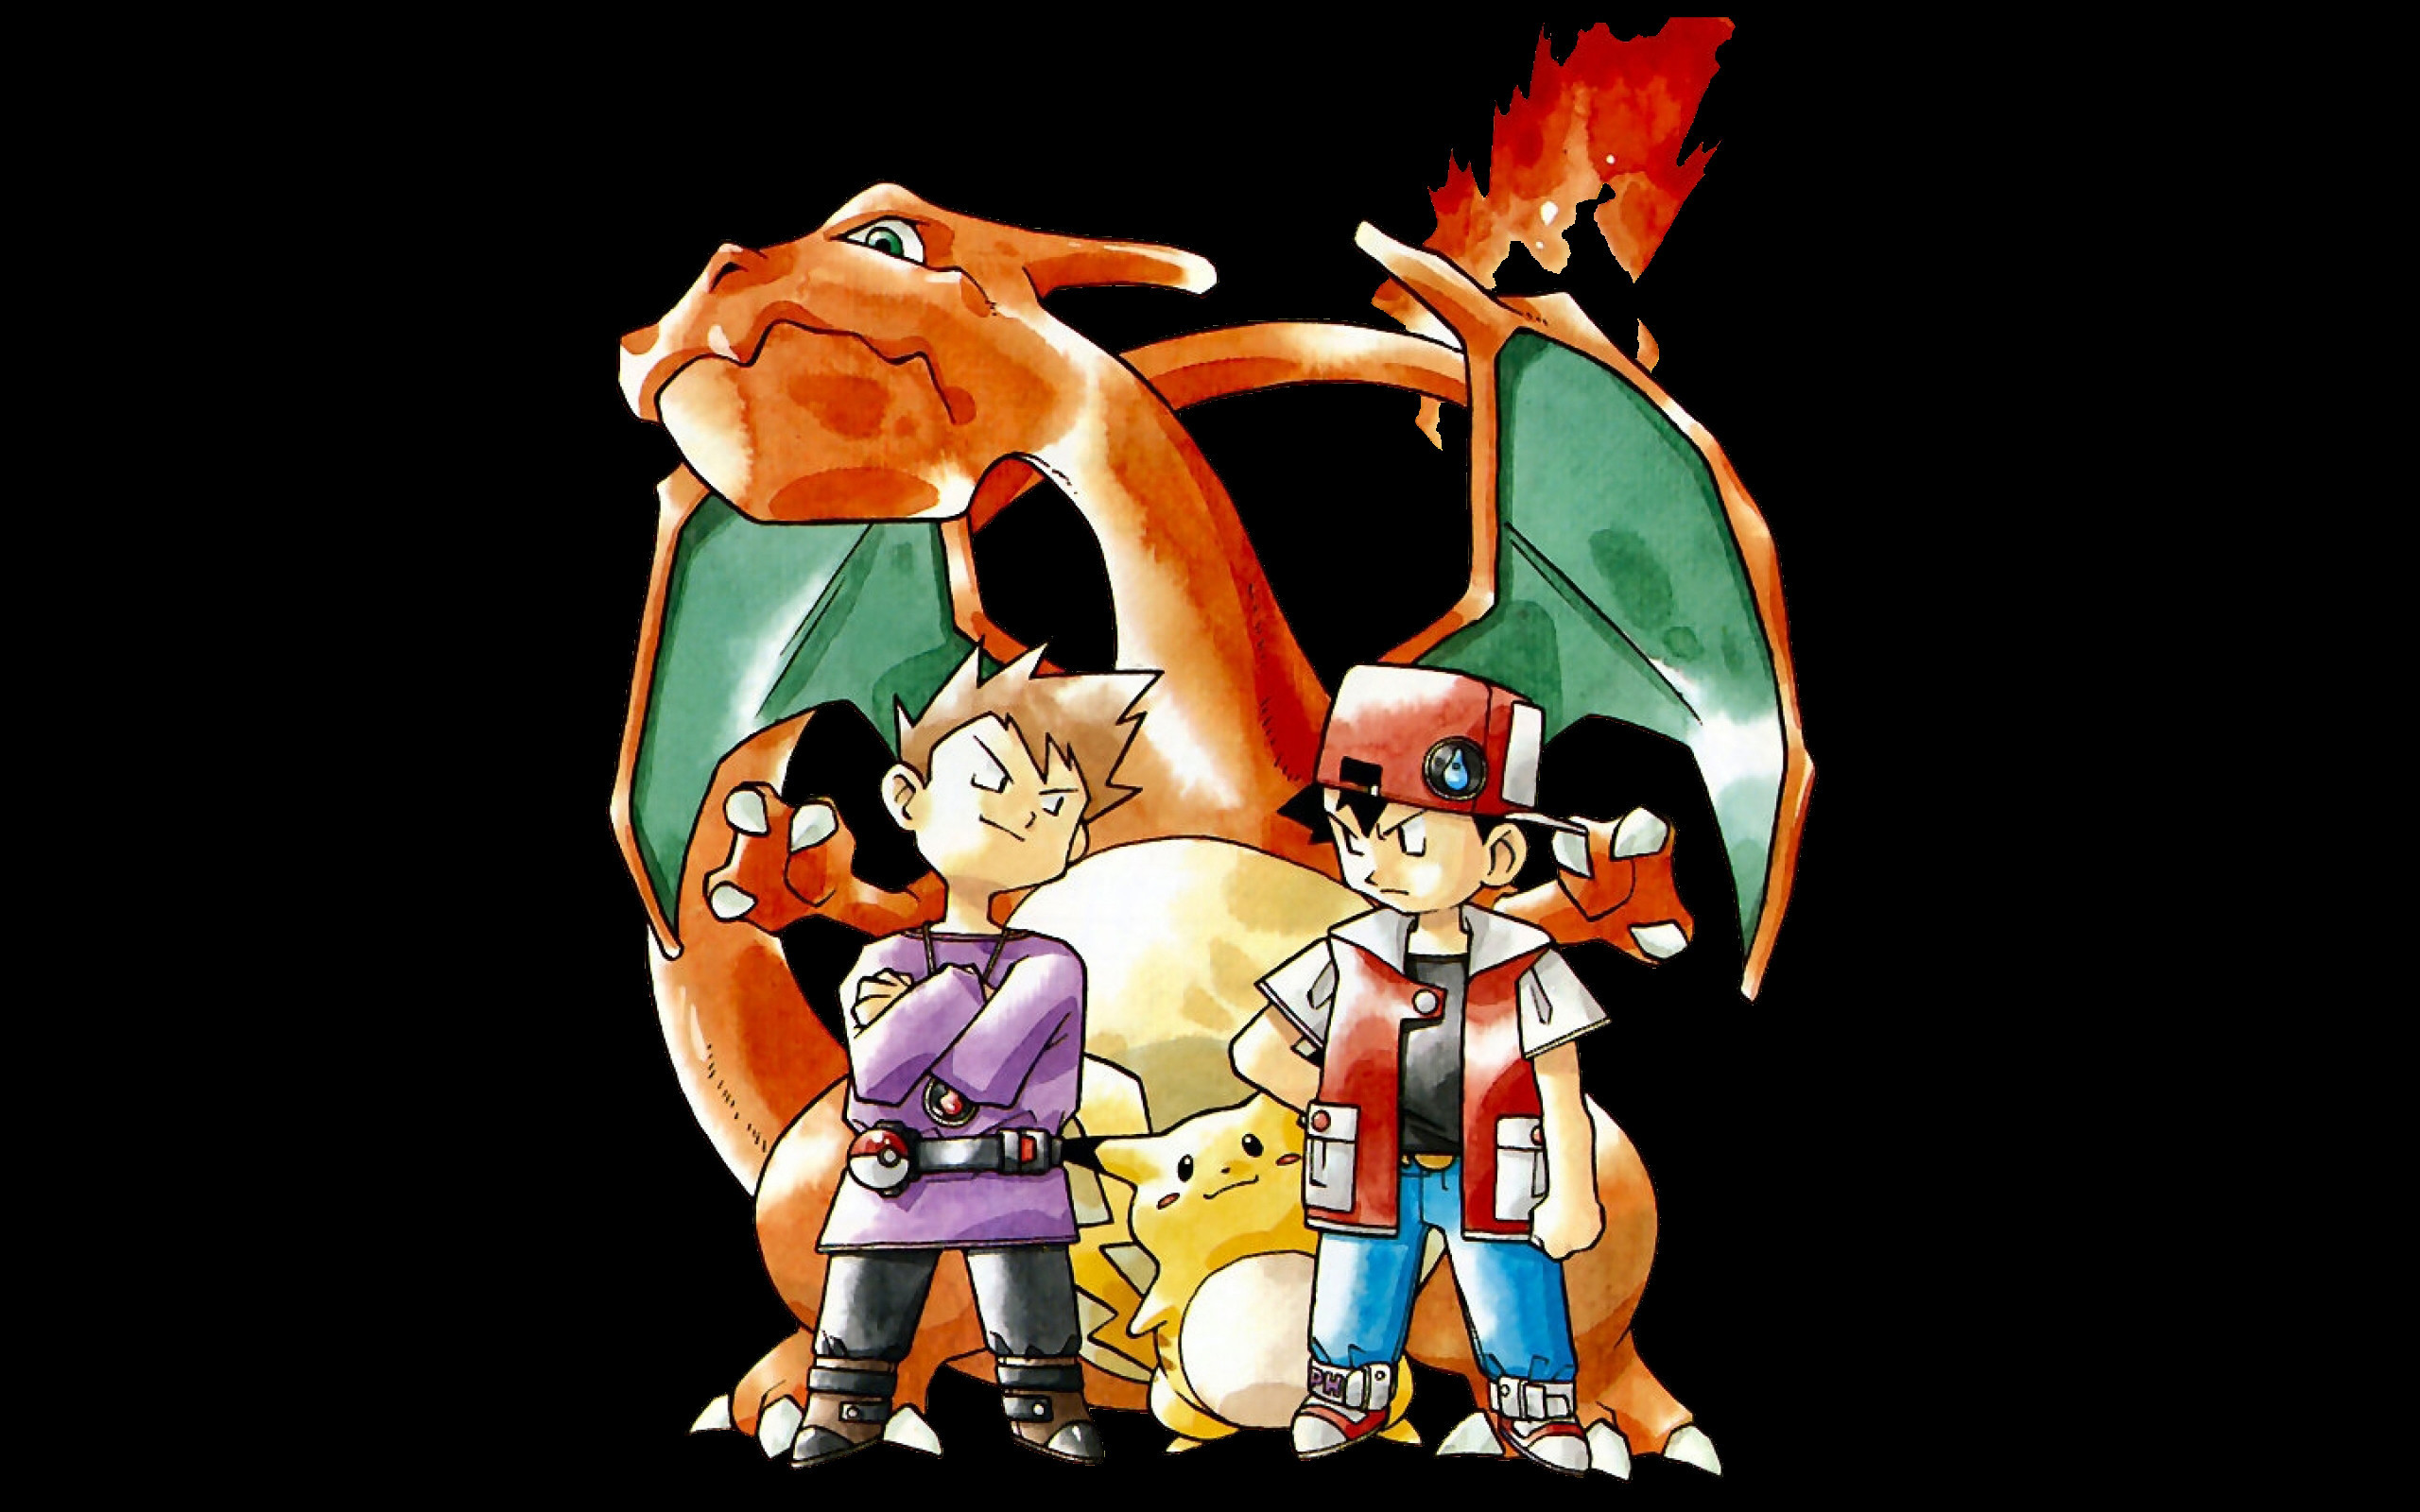 Pokémon Red & Green wallpapers for desktop, download free Pokémon